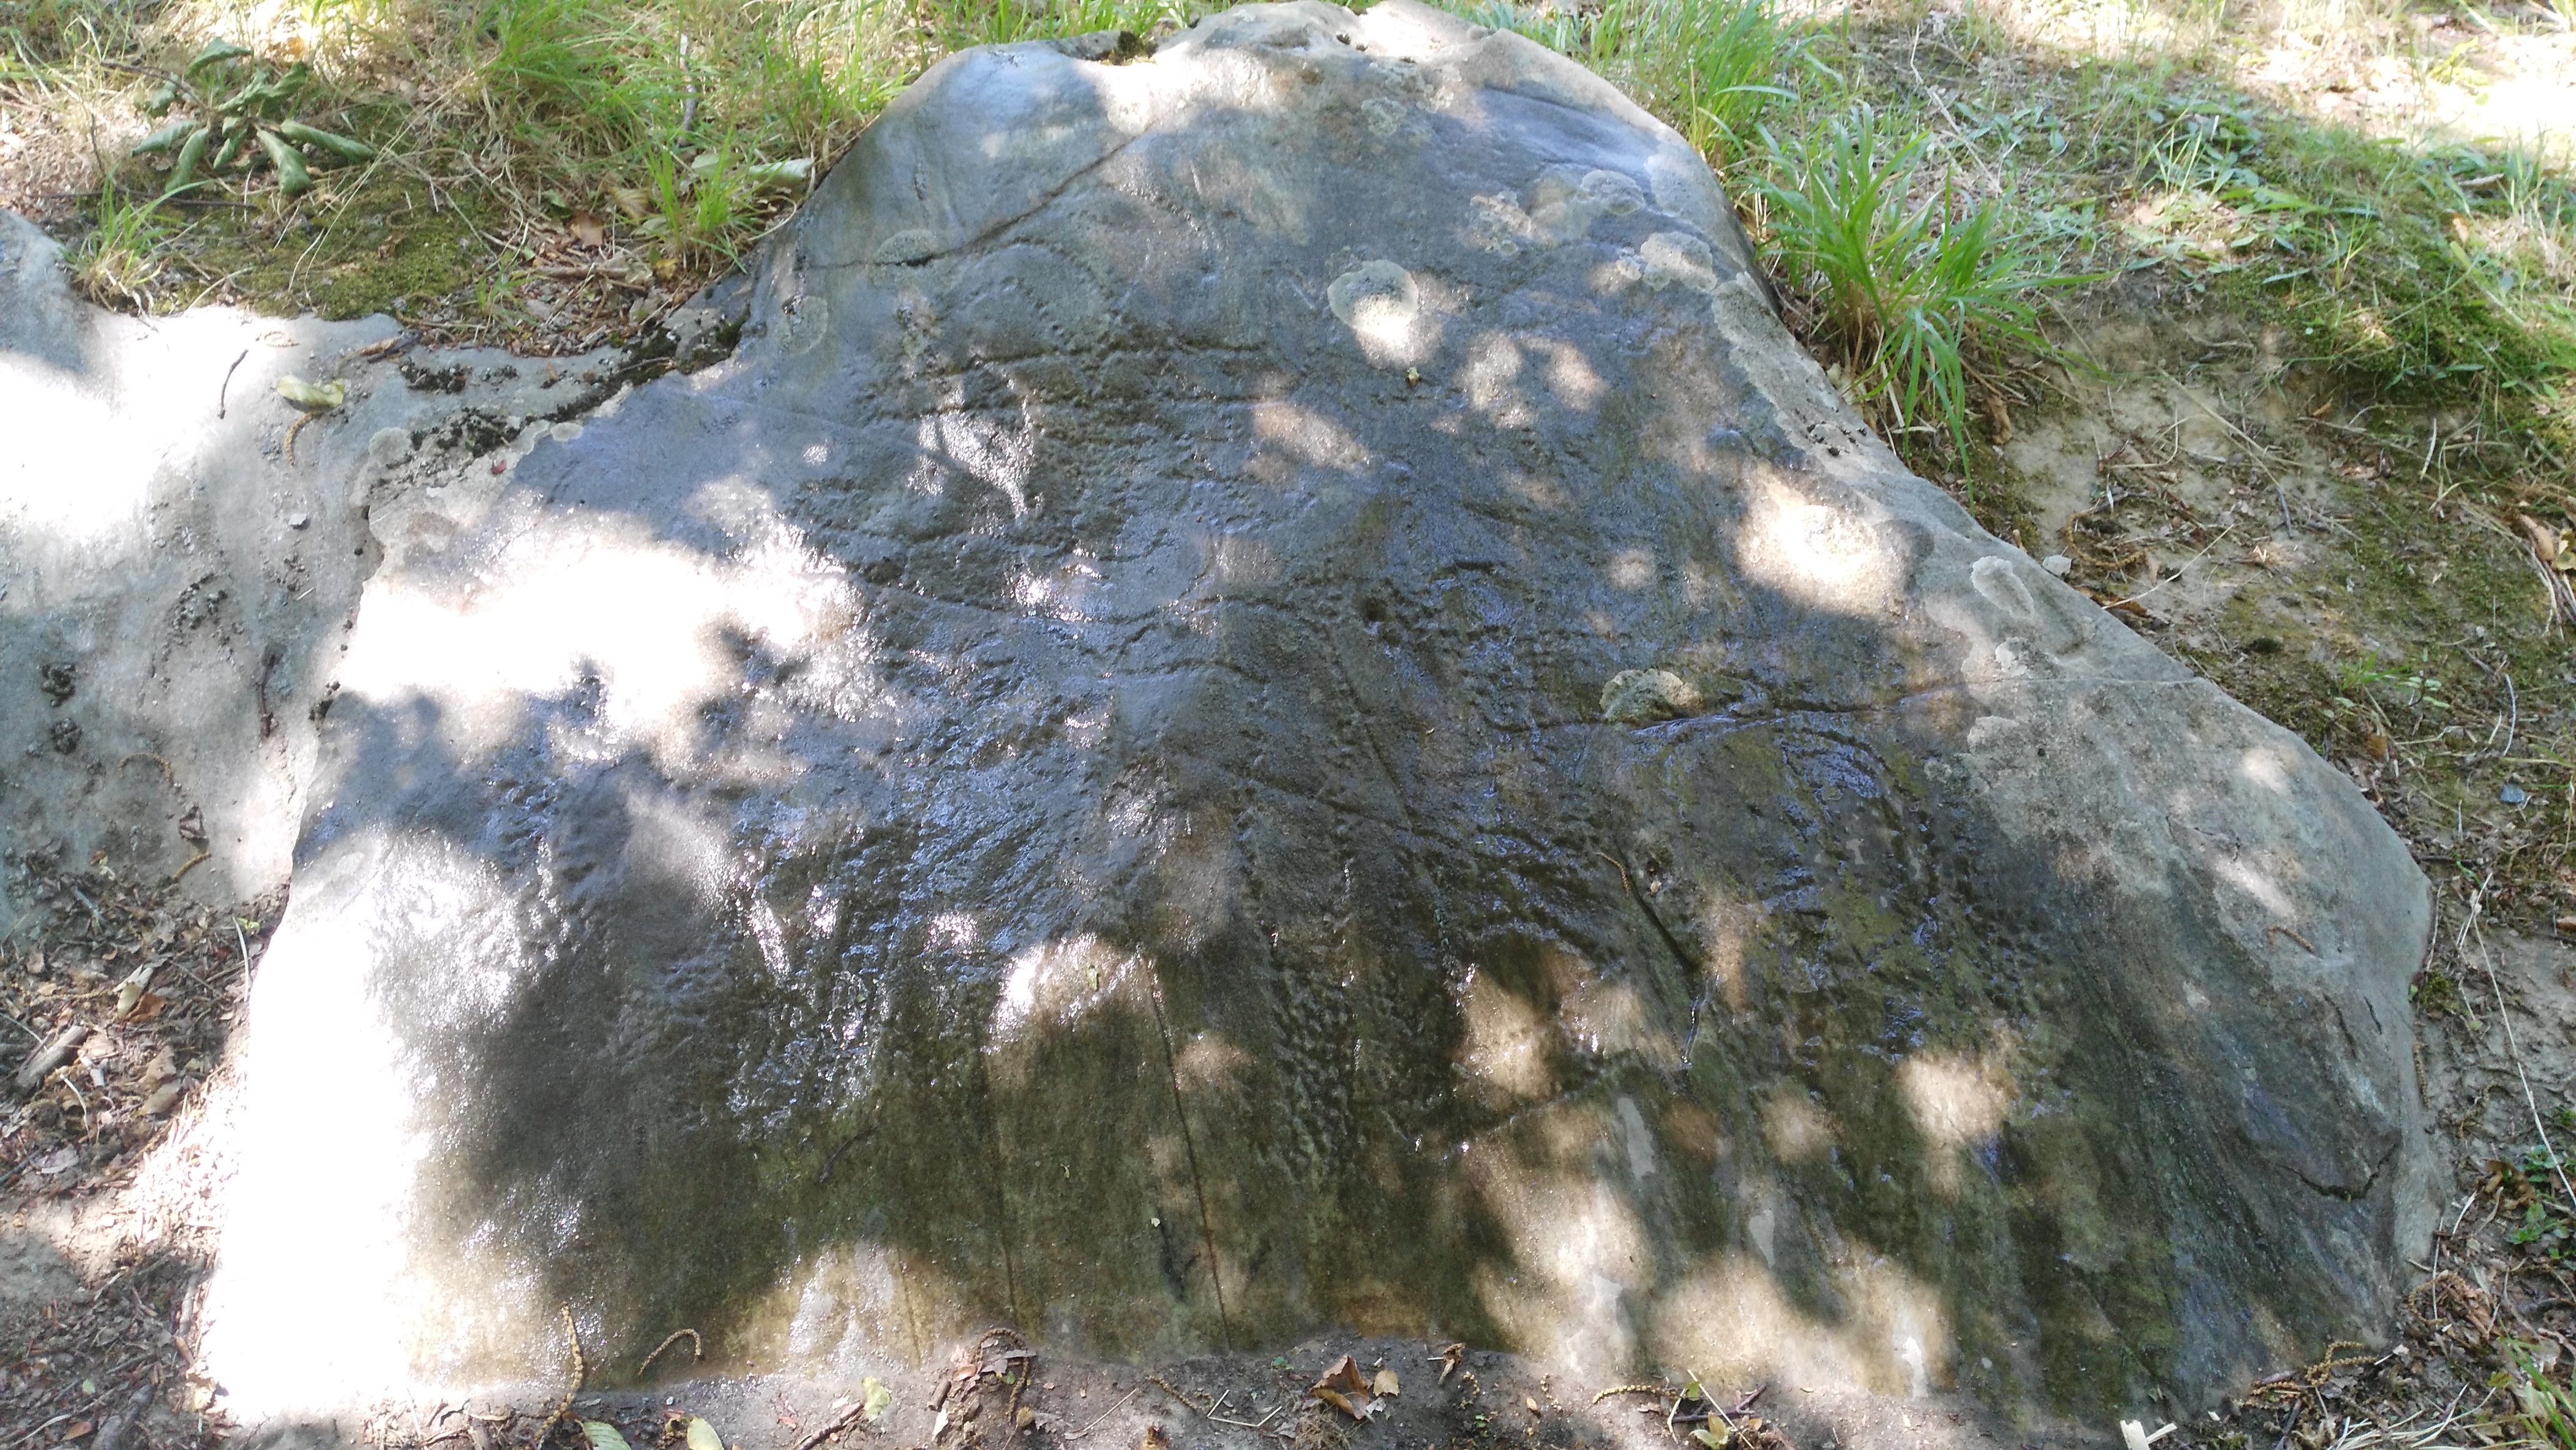 Puntato - Petroglyph on the rock - Crosses ''pennati''